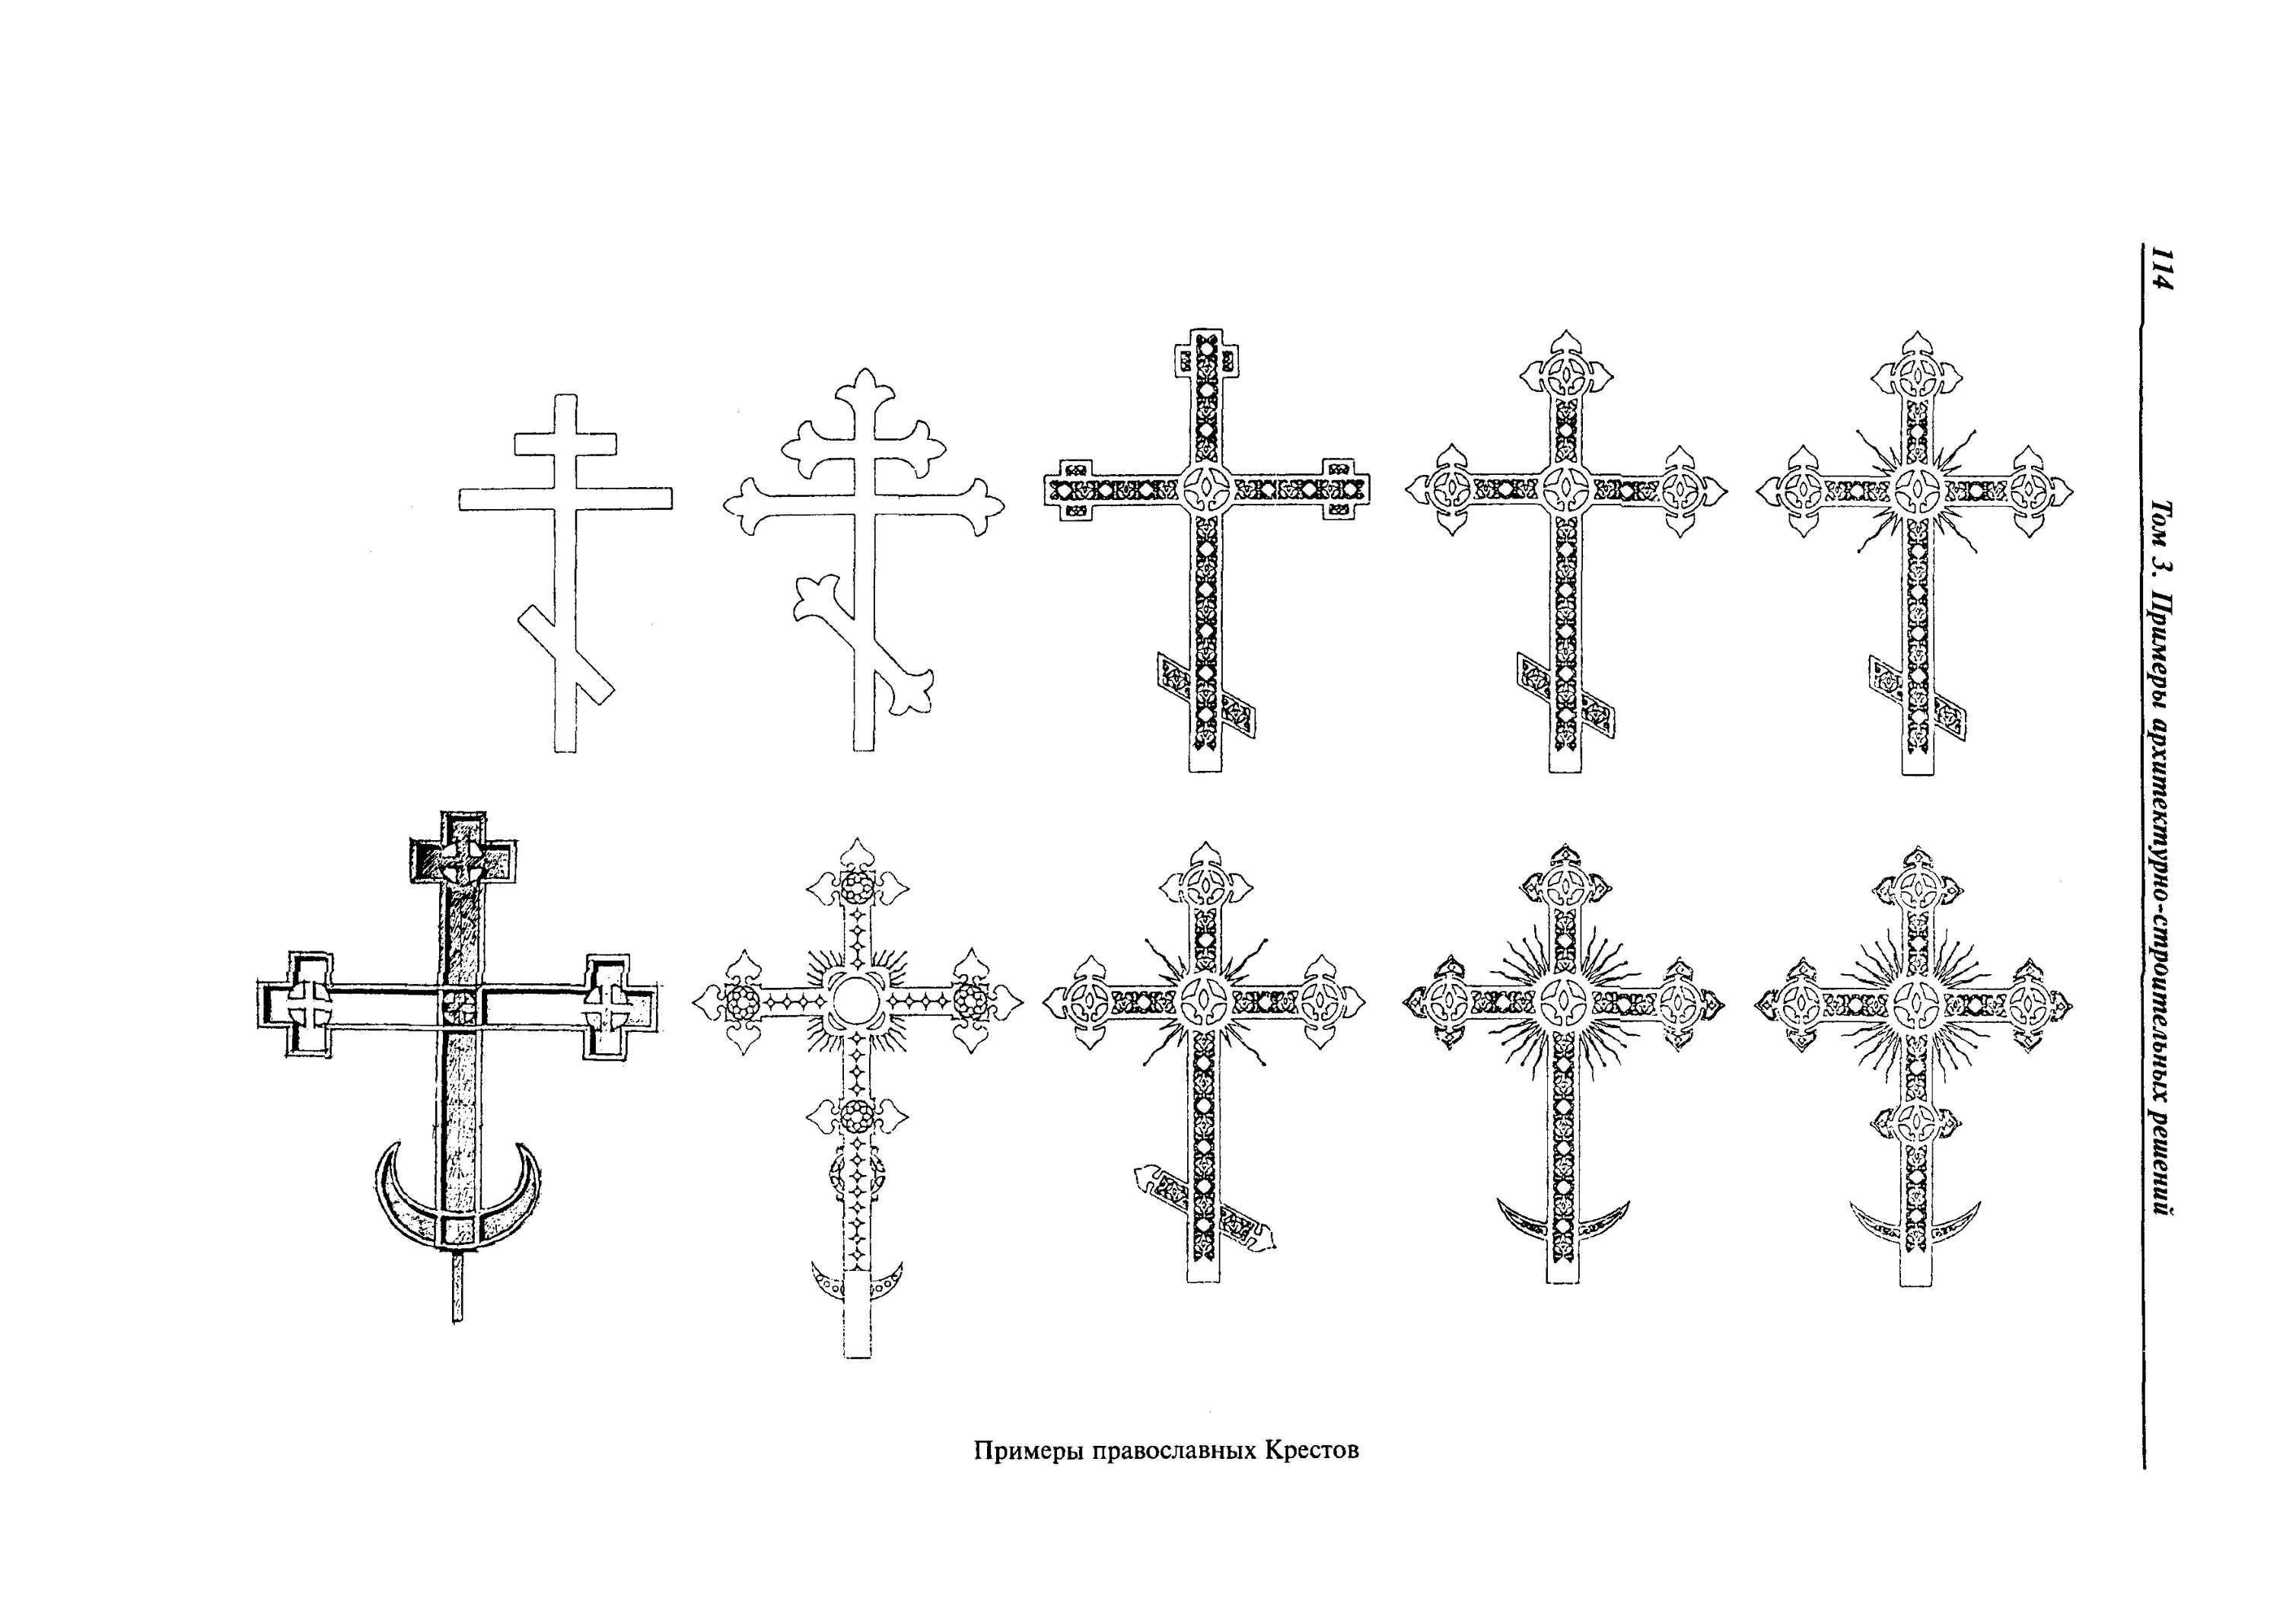 Форма крестов на православных храмах. Православный накупольный крест. Типы крестов на храмах. Форма крестов на куполах.